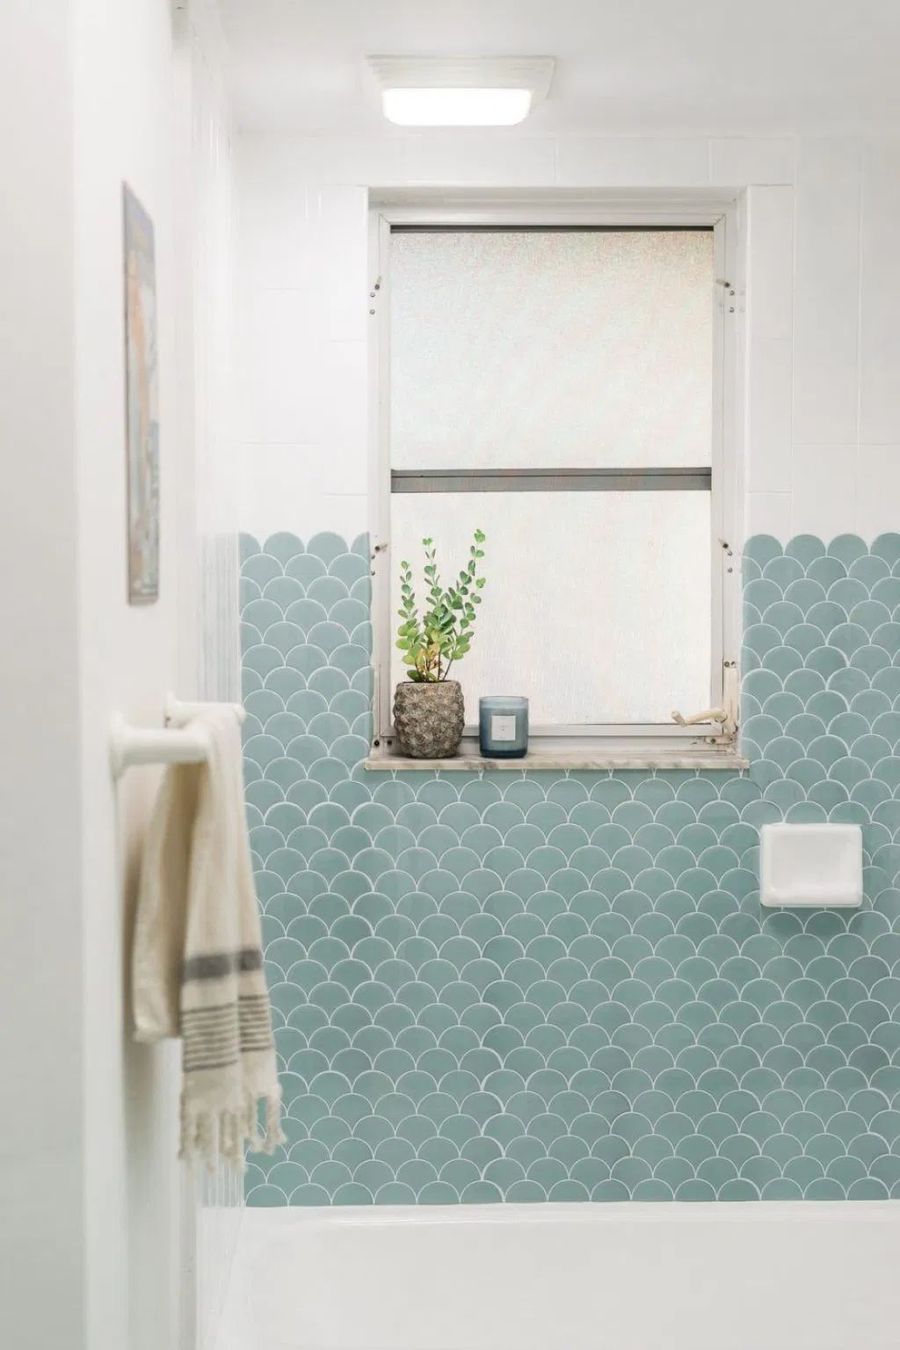 Coastal Bathroom with Fish Scale Tile via sweetteal